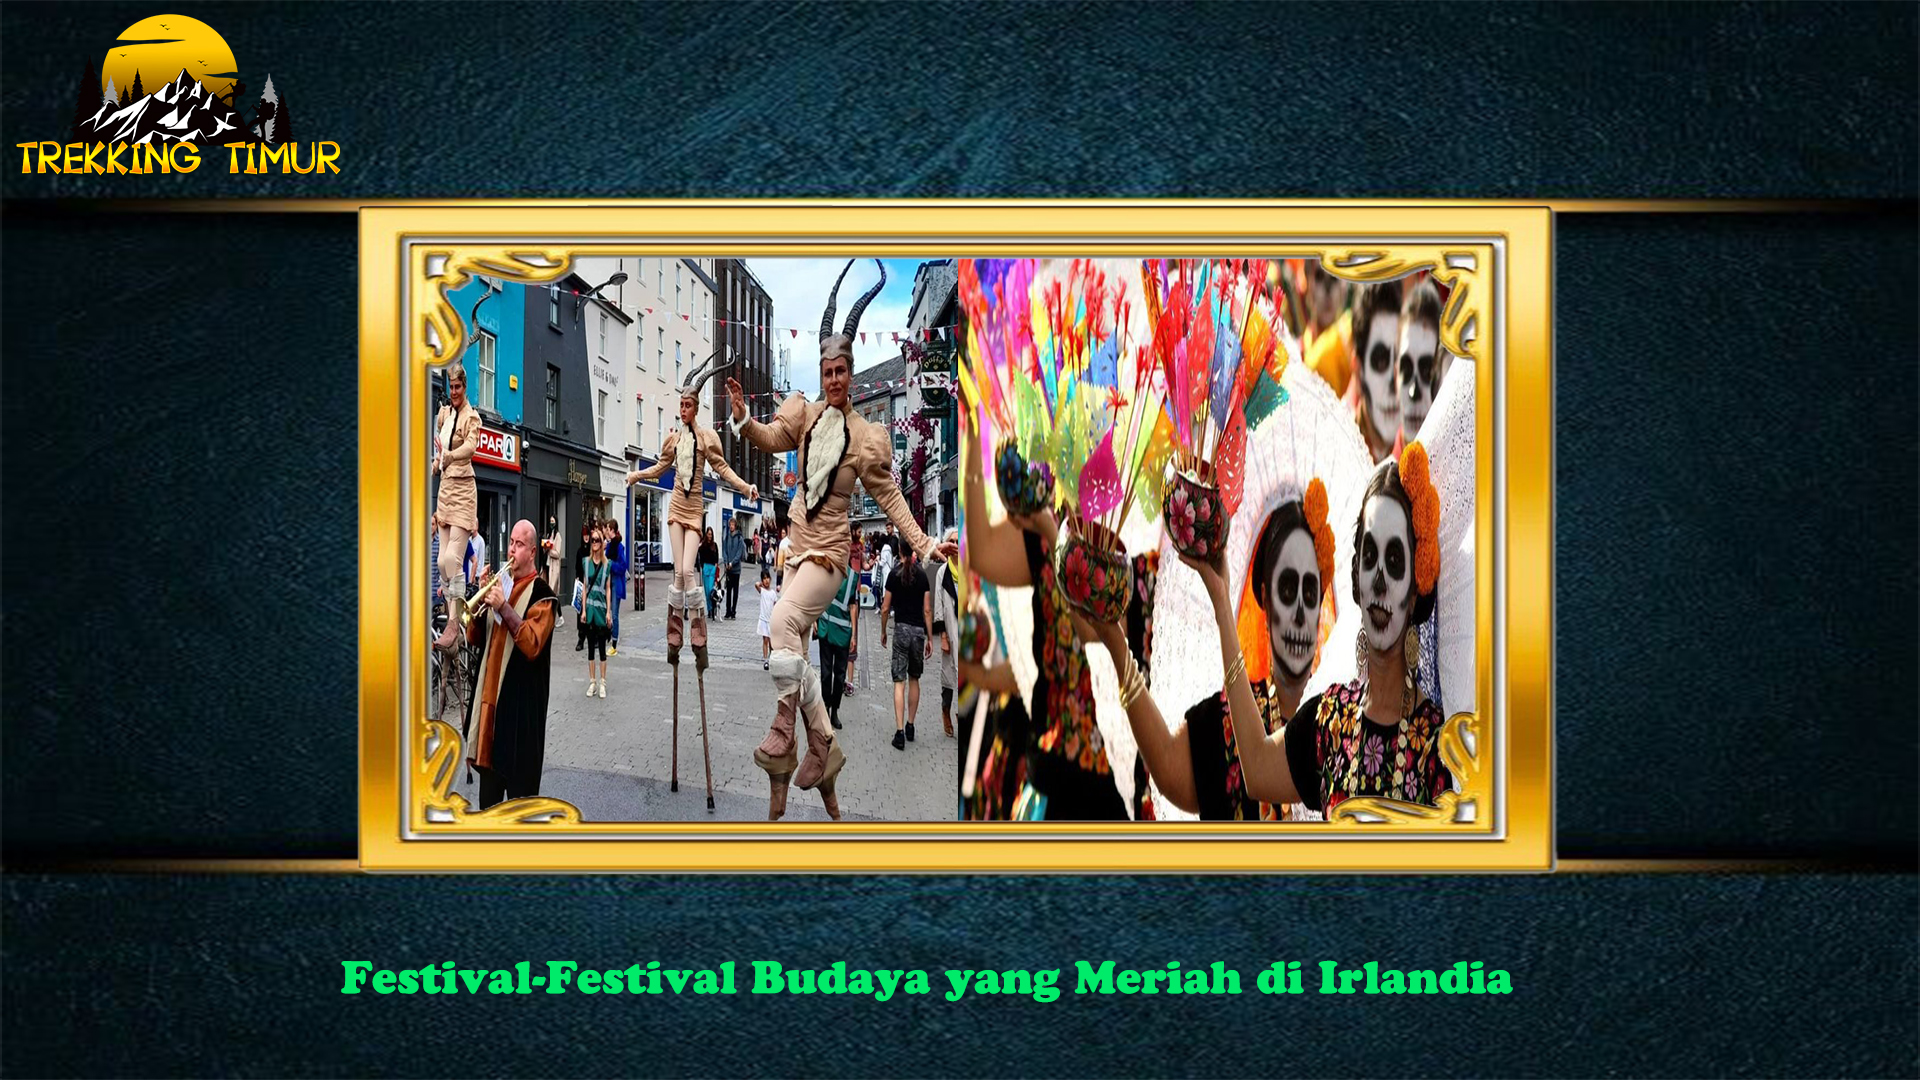 Festival-Festival Budaya yang Meriah di Irlandia